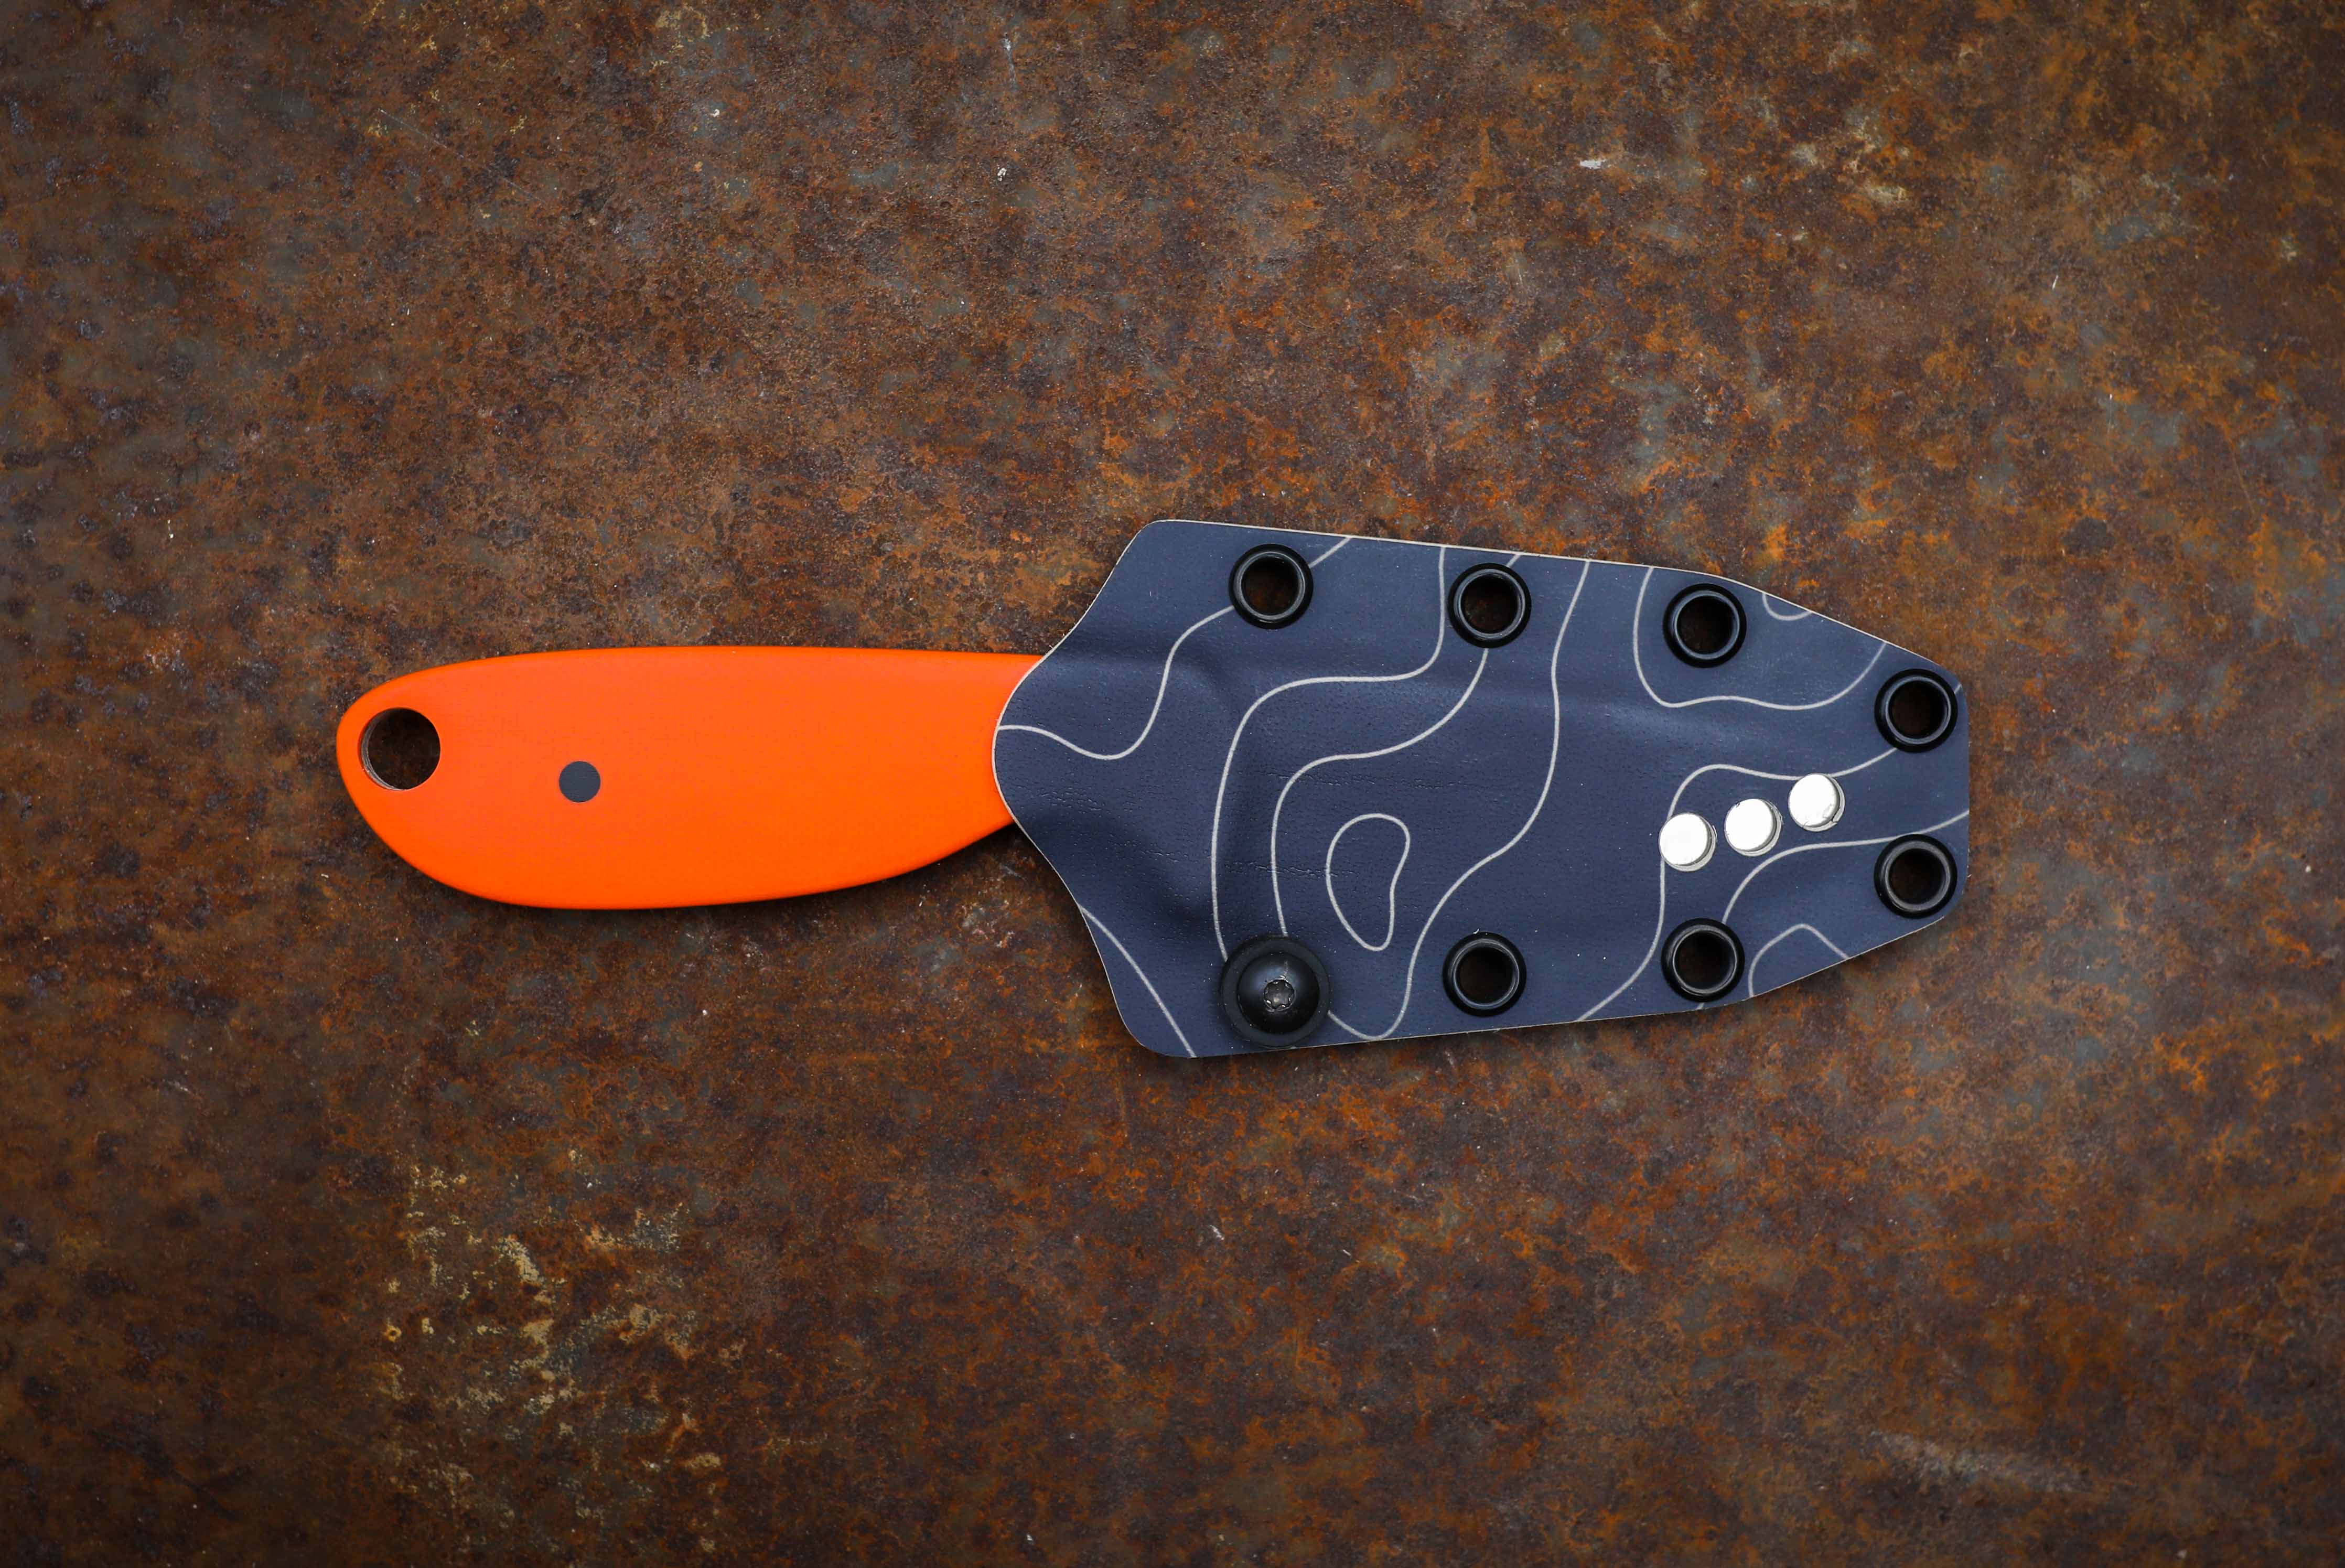 River Knife / Safety Orange with Contour Sheath